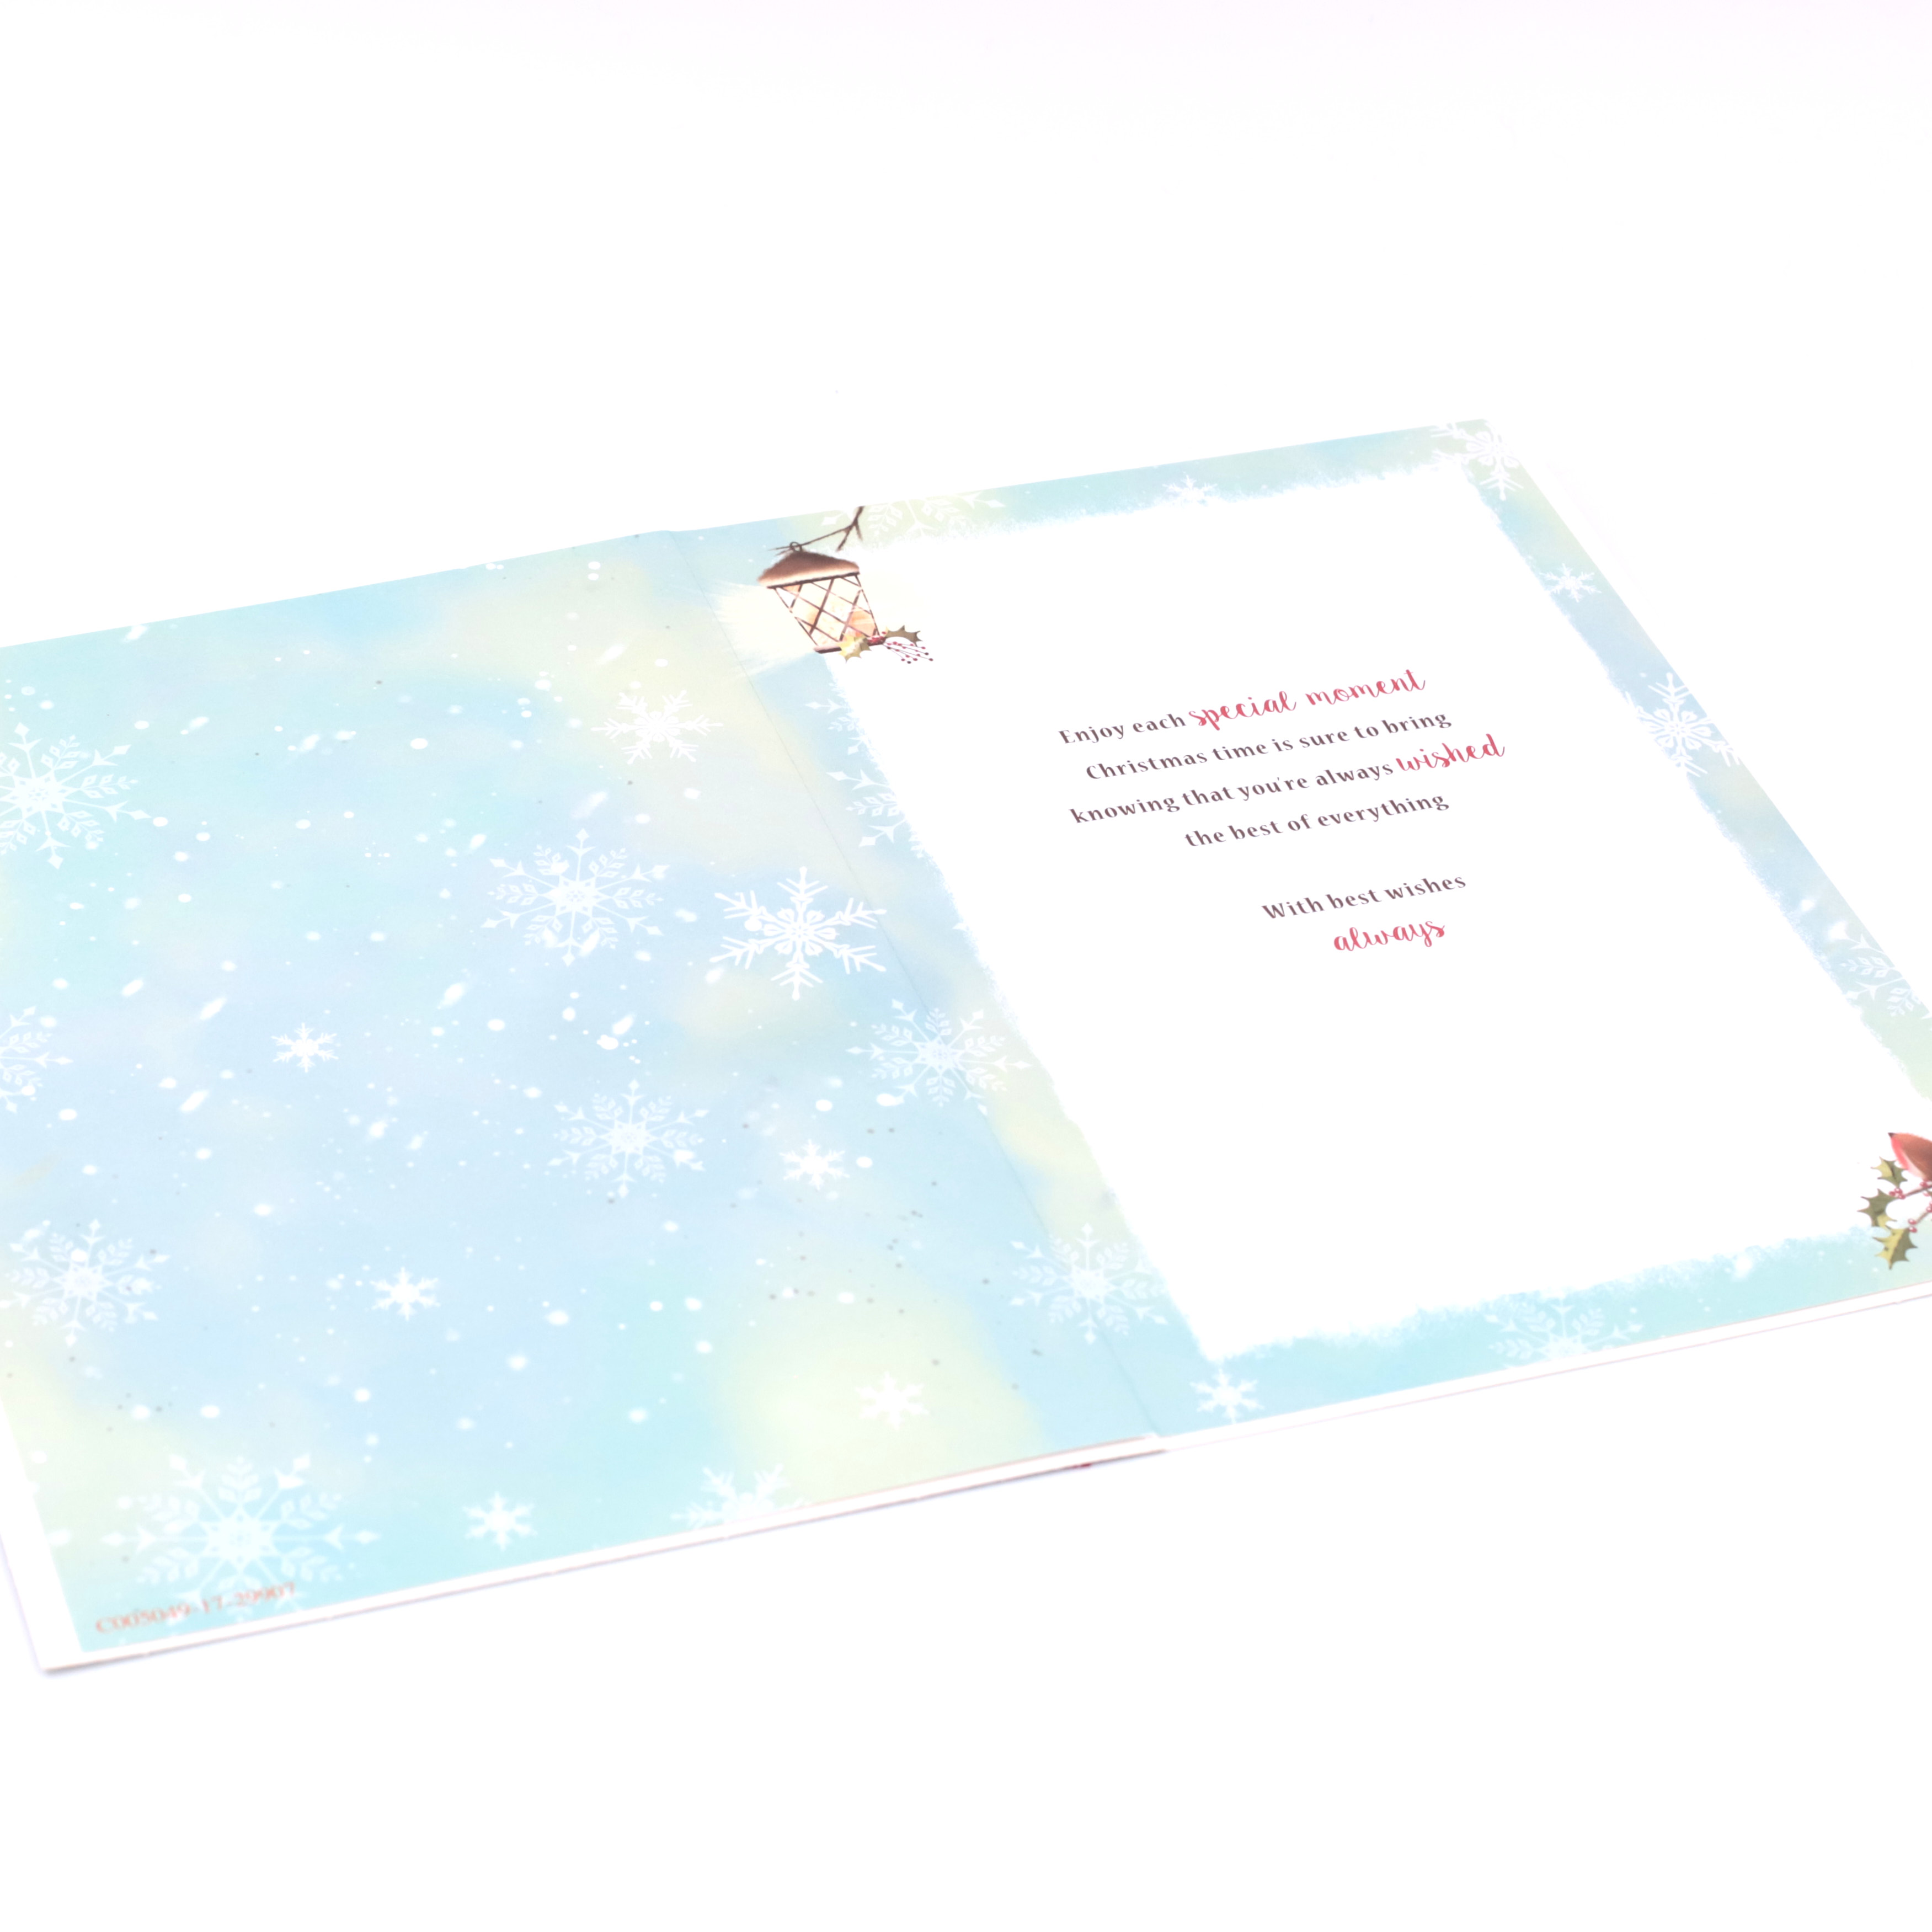 Christmas Card - Grandson, Cute Snowman With Presents